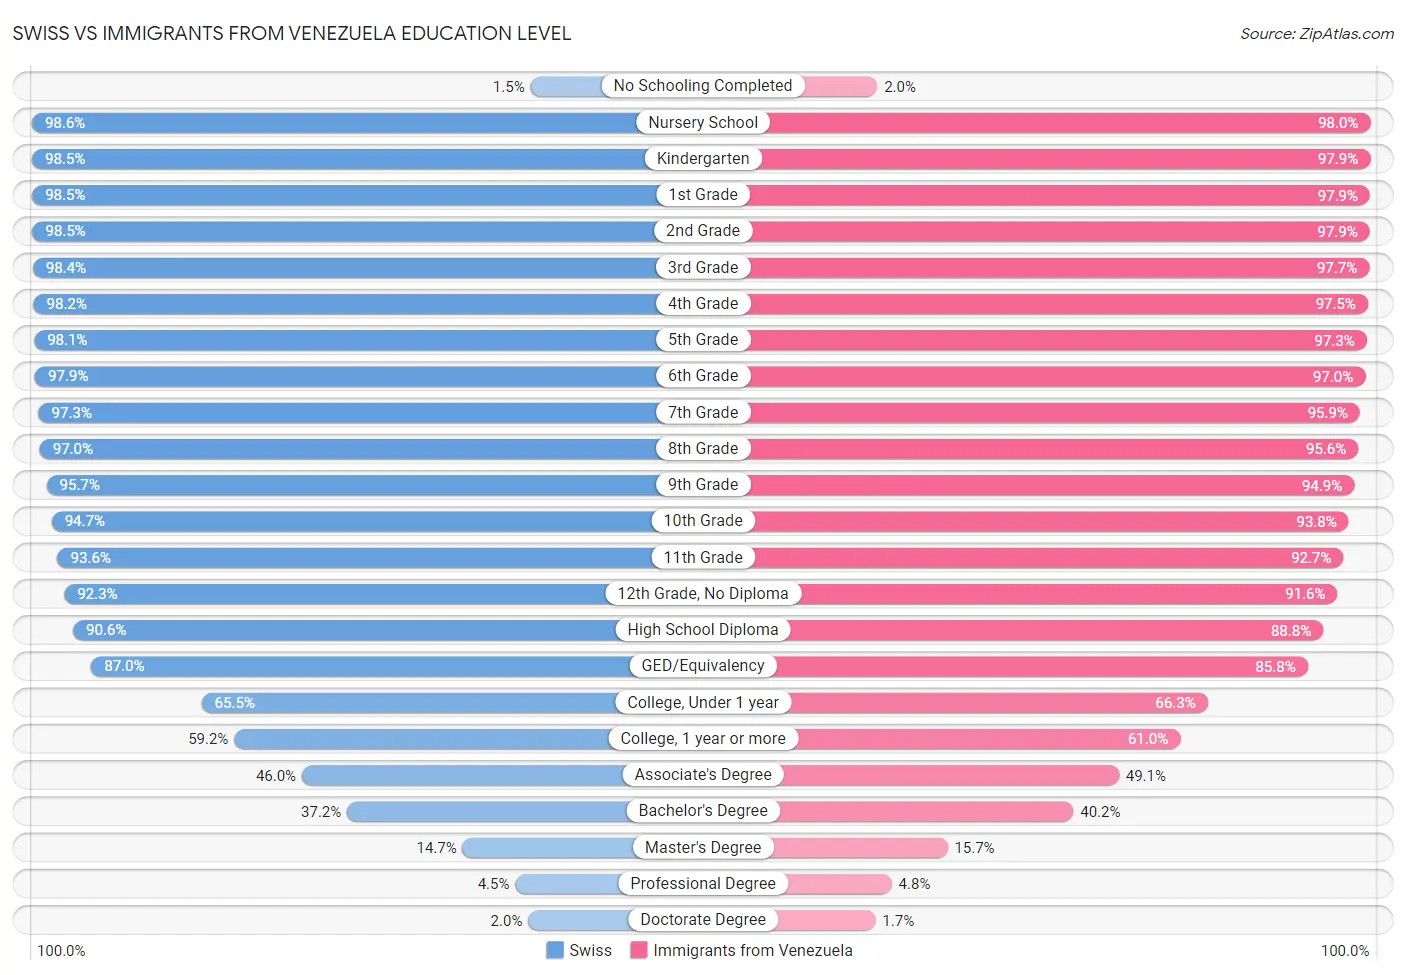 Swiss vs Immigrants from Venezuela Education Level